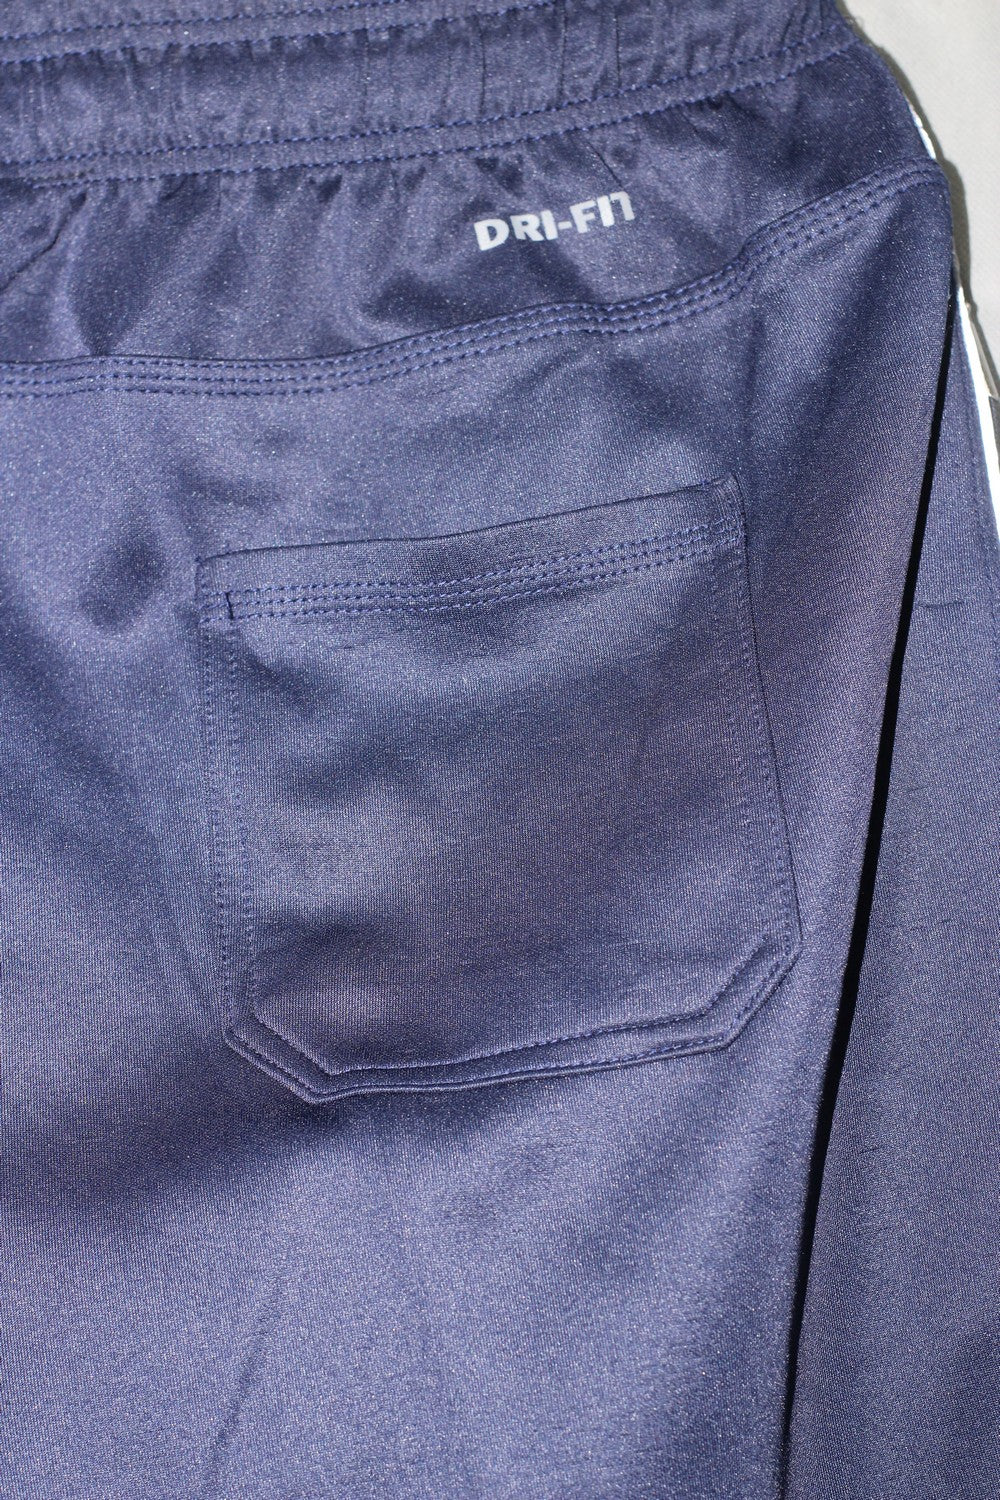 Adidas Dri-Fit Branded Original Sports Winter Trouser For Men